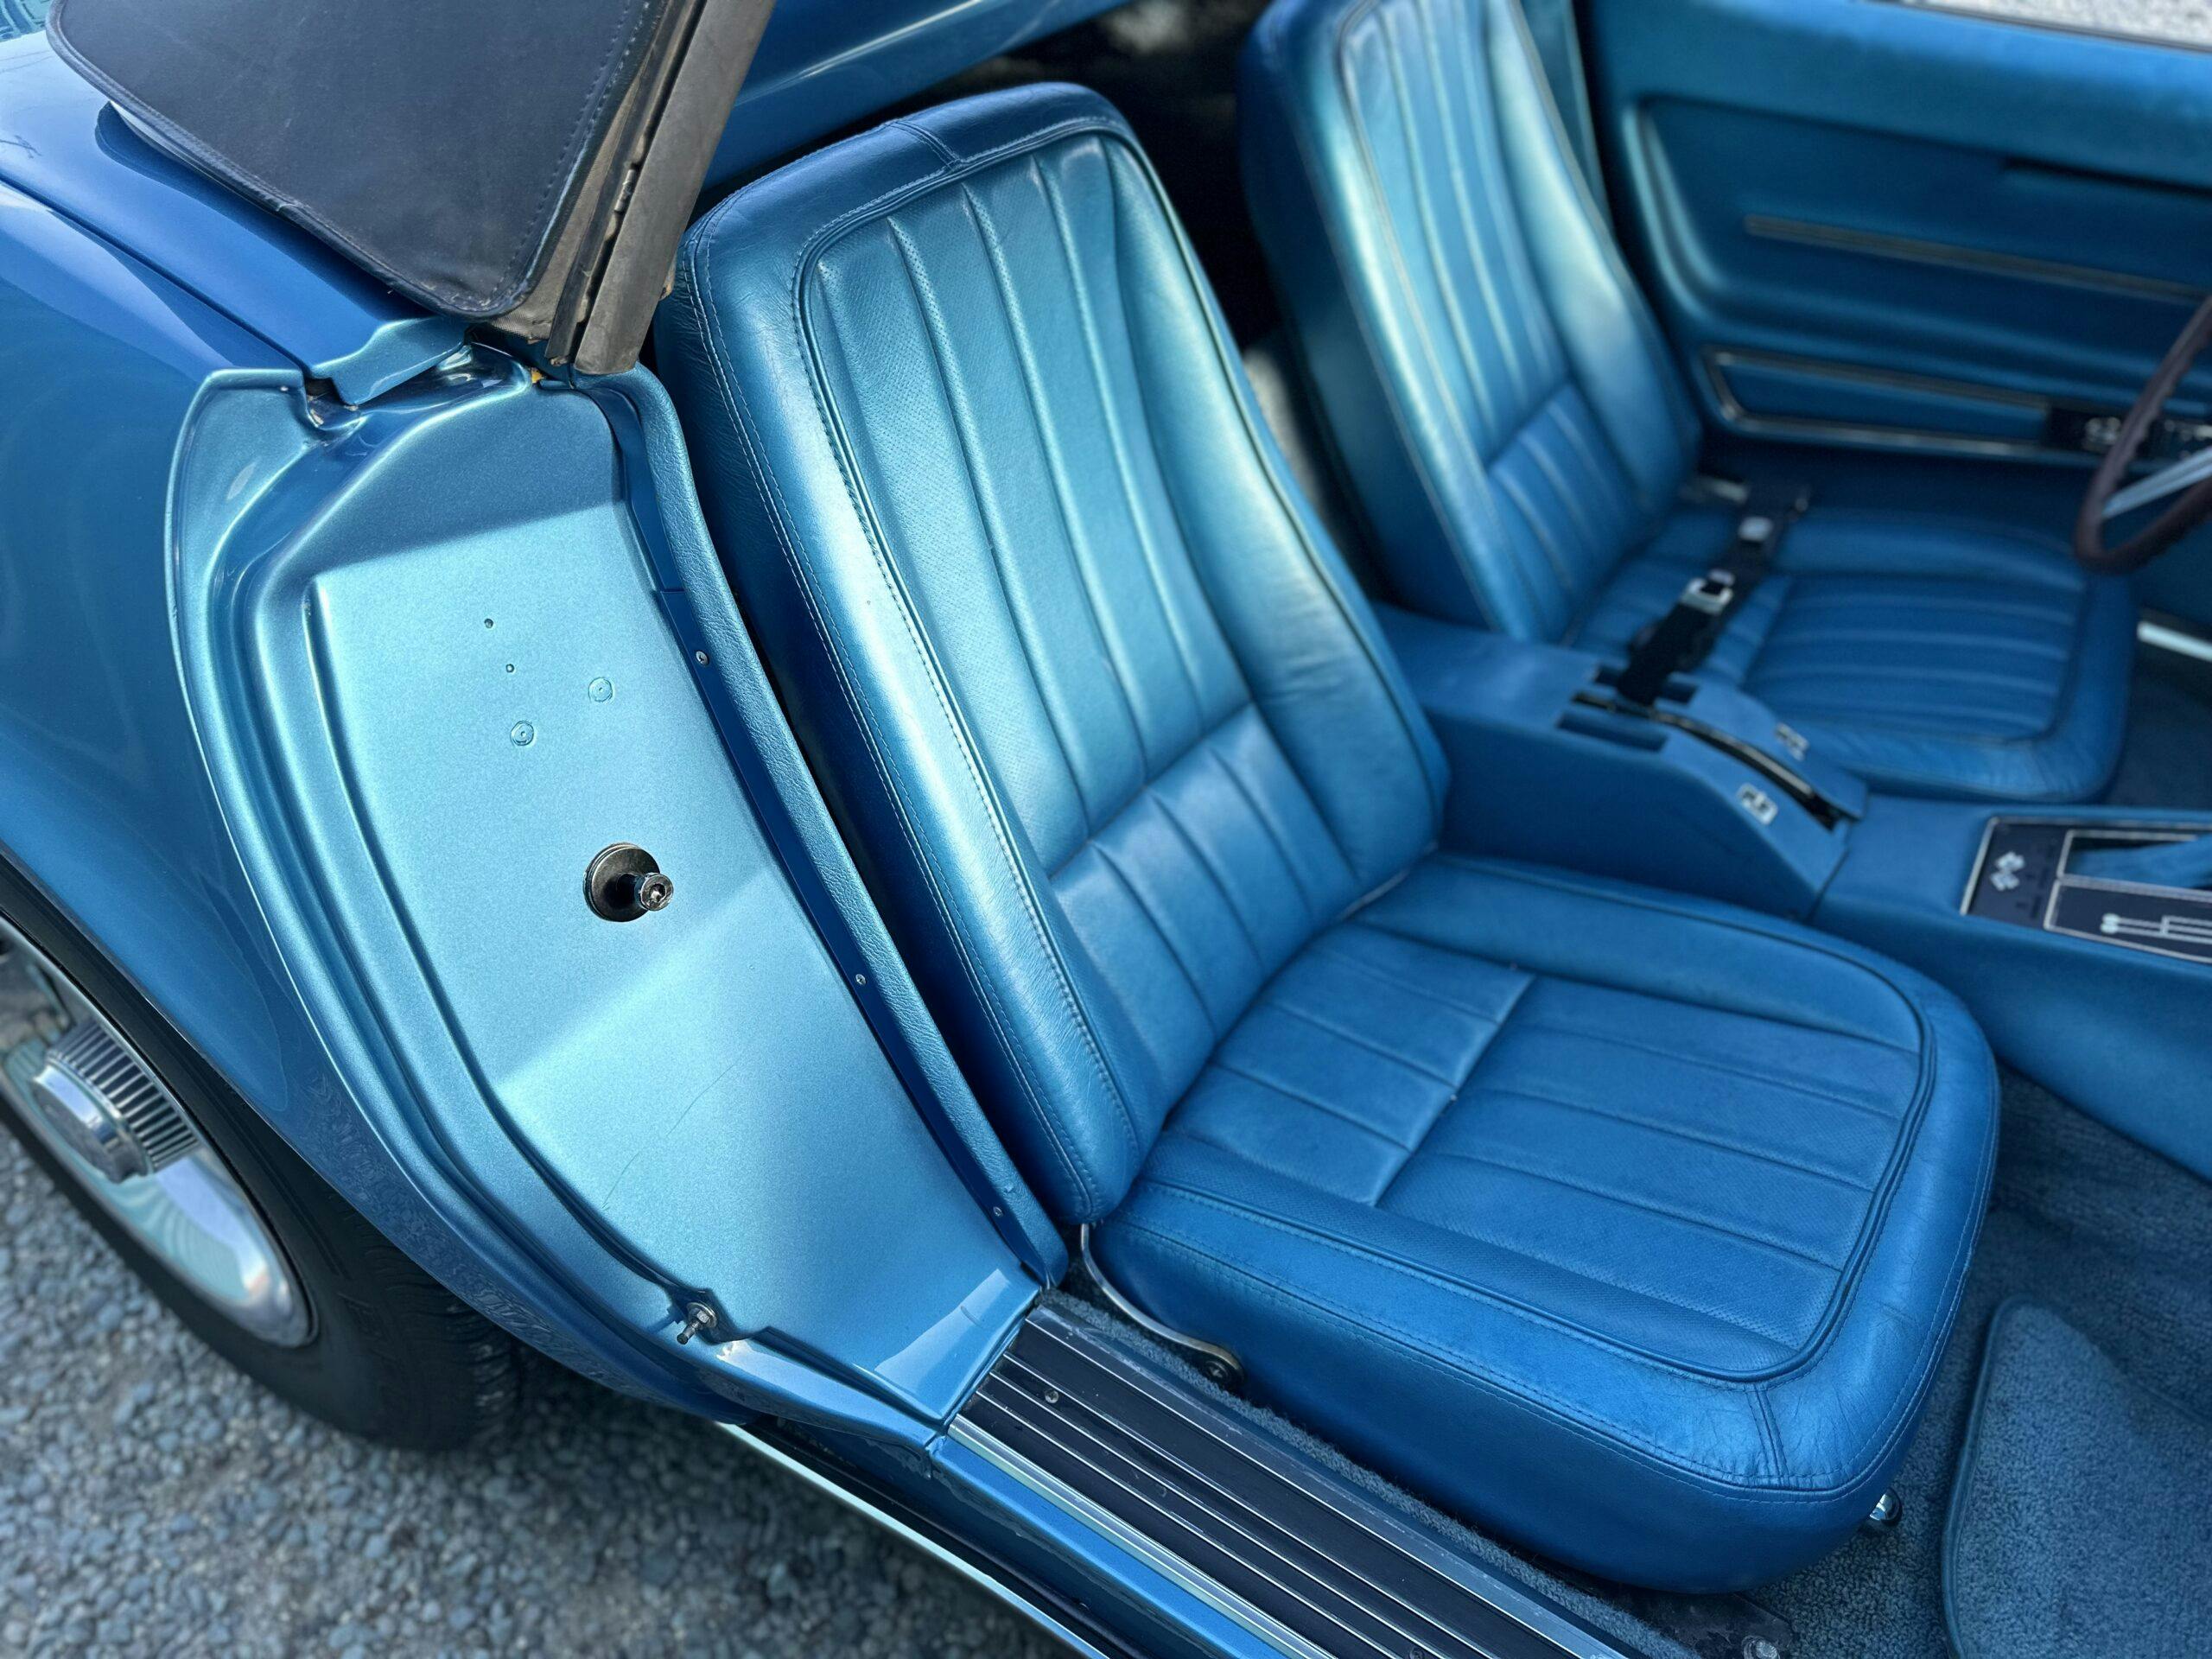 1968 Corvette C2 Stingray interior seats